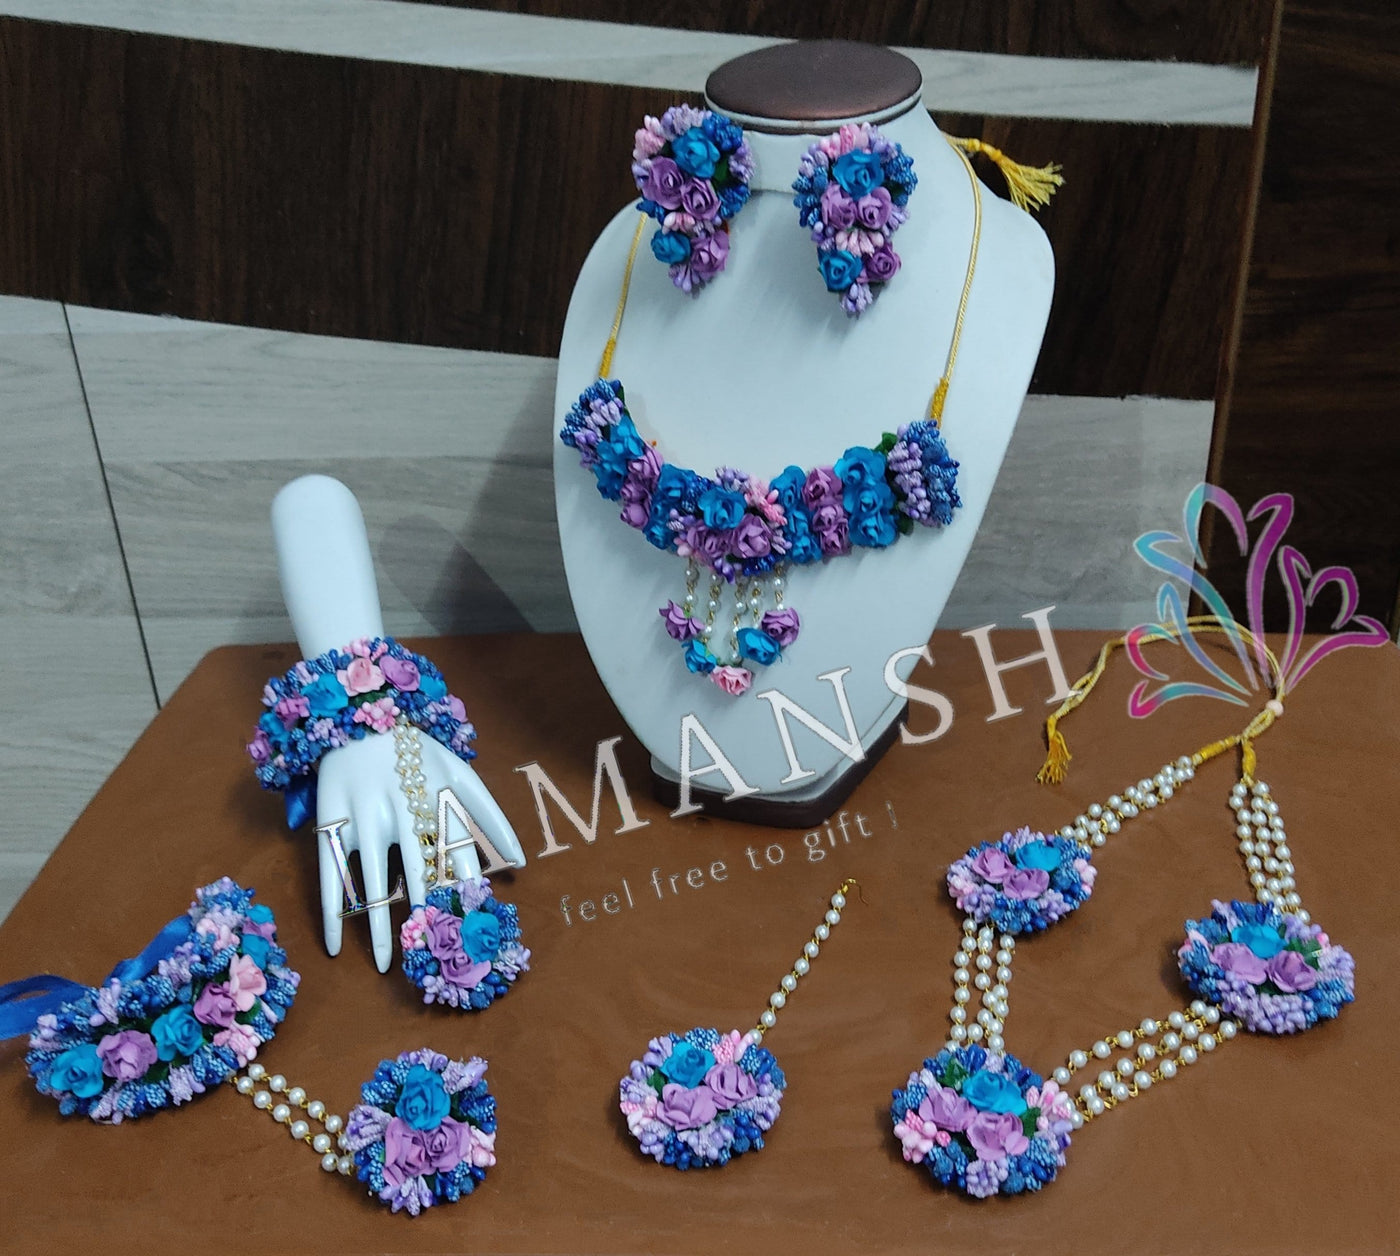 Lamansh Baby 👶shower 1 Necklace , 1 Choker , 2 Earrings, 2 Bracelets attached with Ring & 1 Maangtika / Purple Blue LAMANSH® Special Royal Color Flower 🌺 Jewellery Set for Haldi / Floral set